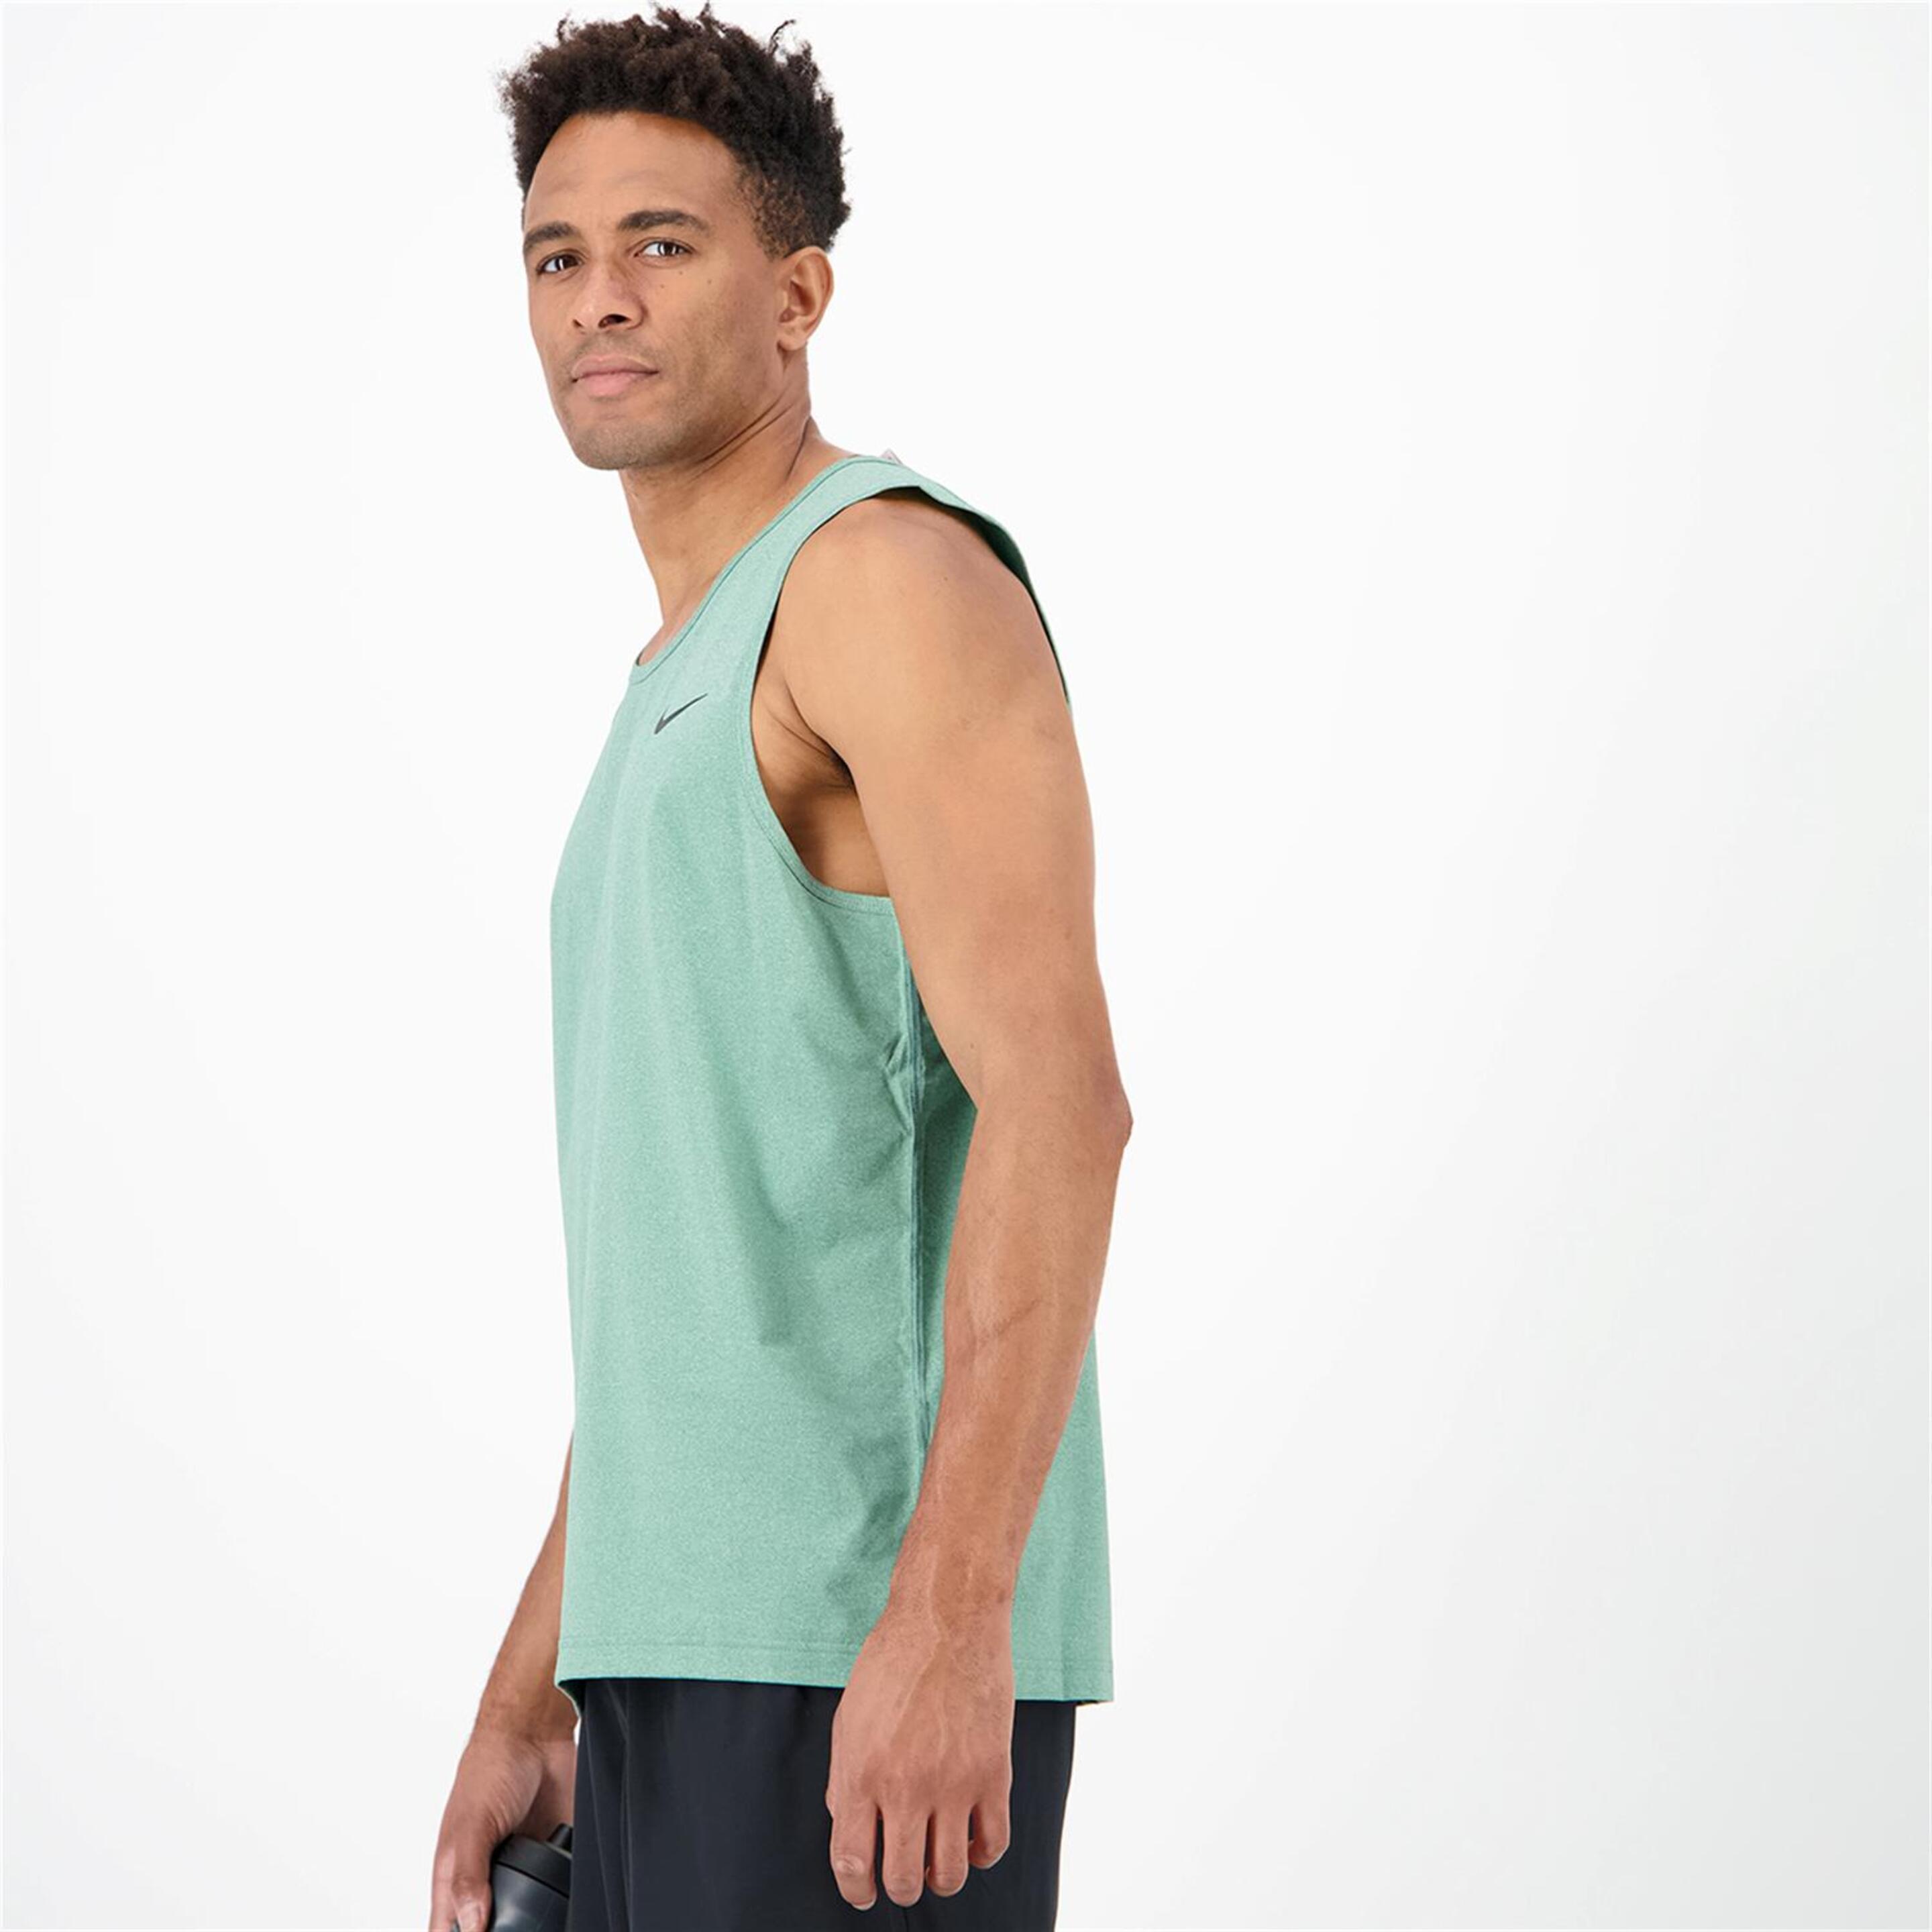 Nike Hyverse Dri-FIT - Kaki - Camiseta Running Hombre